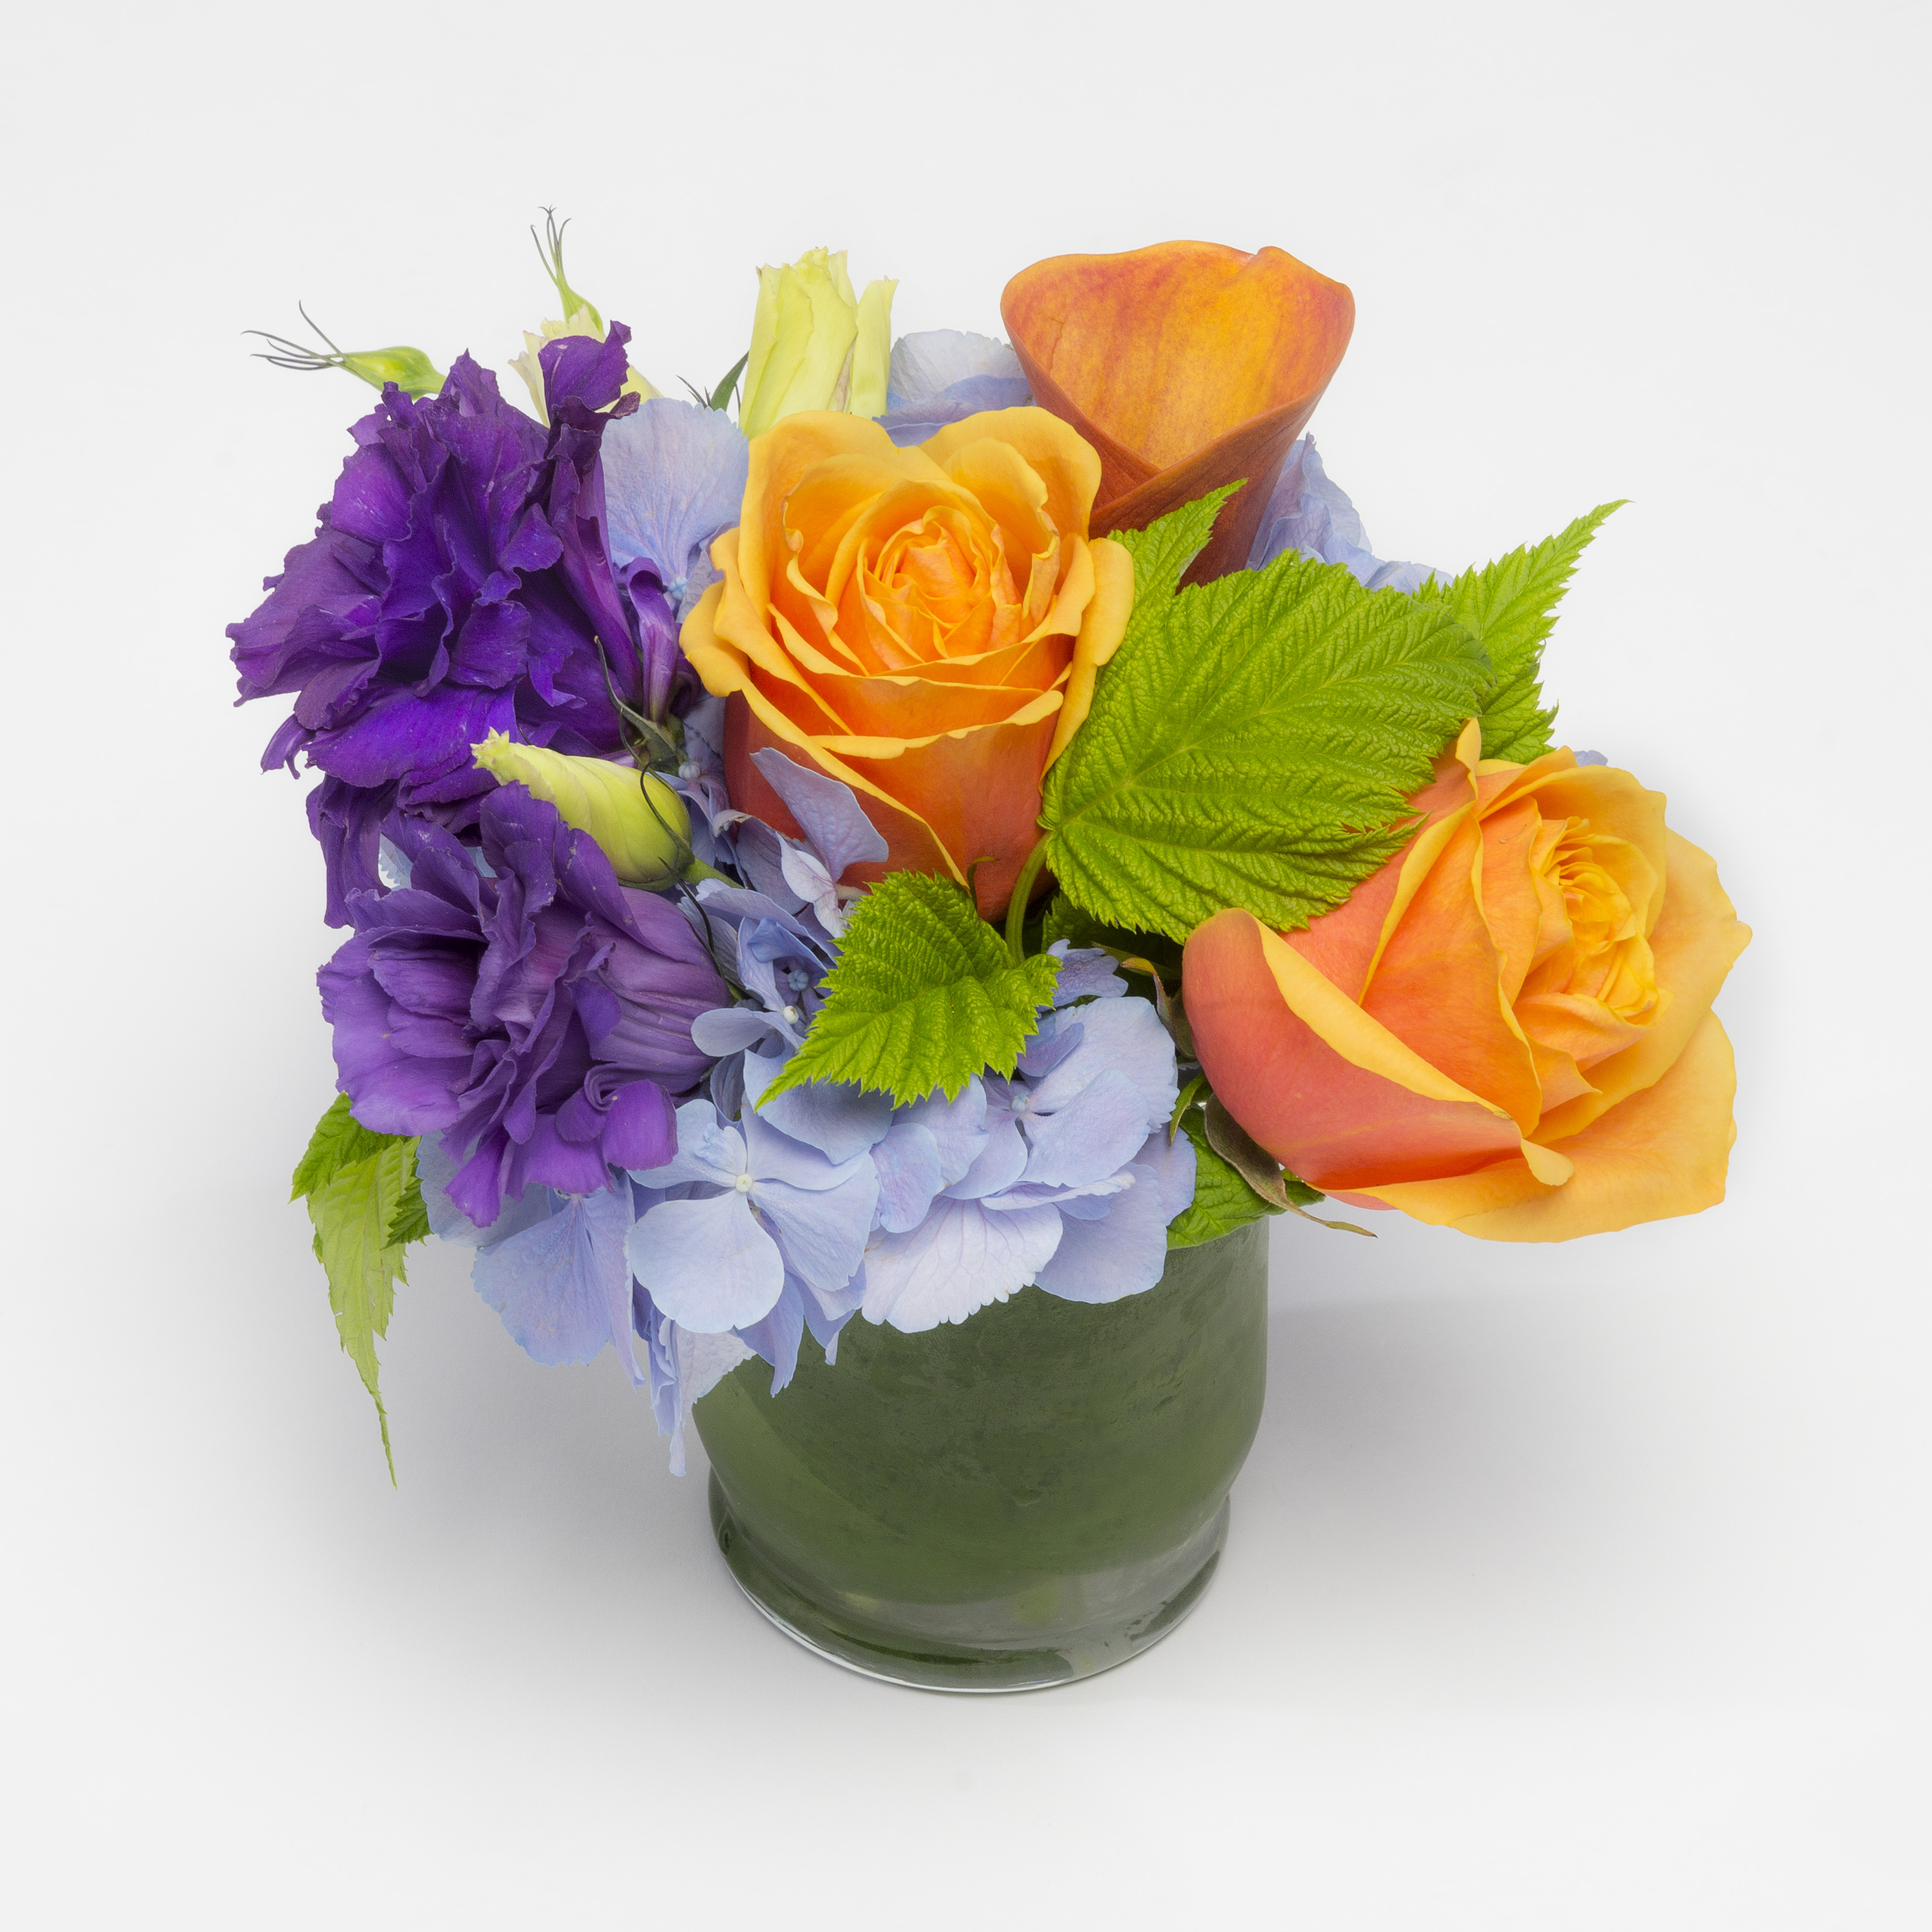 orange and purple arrangement - $25